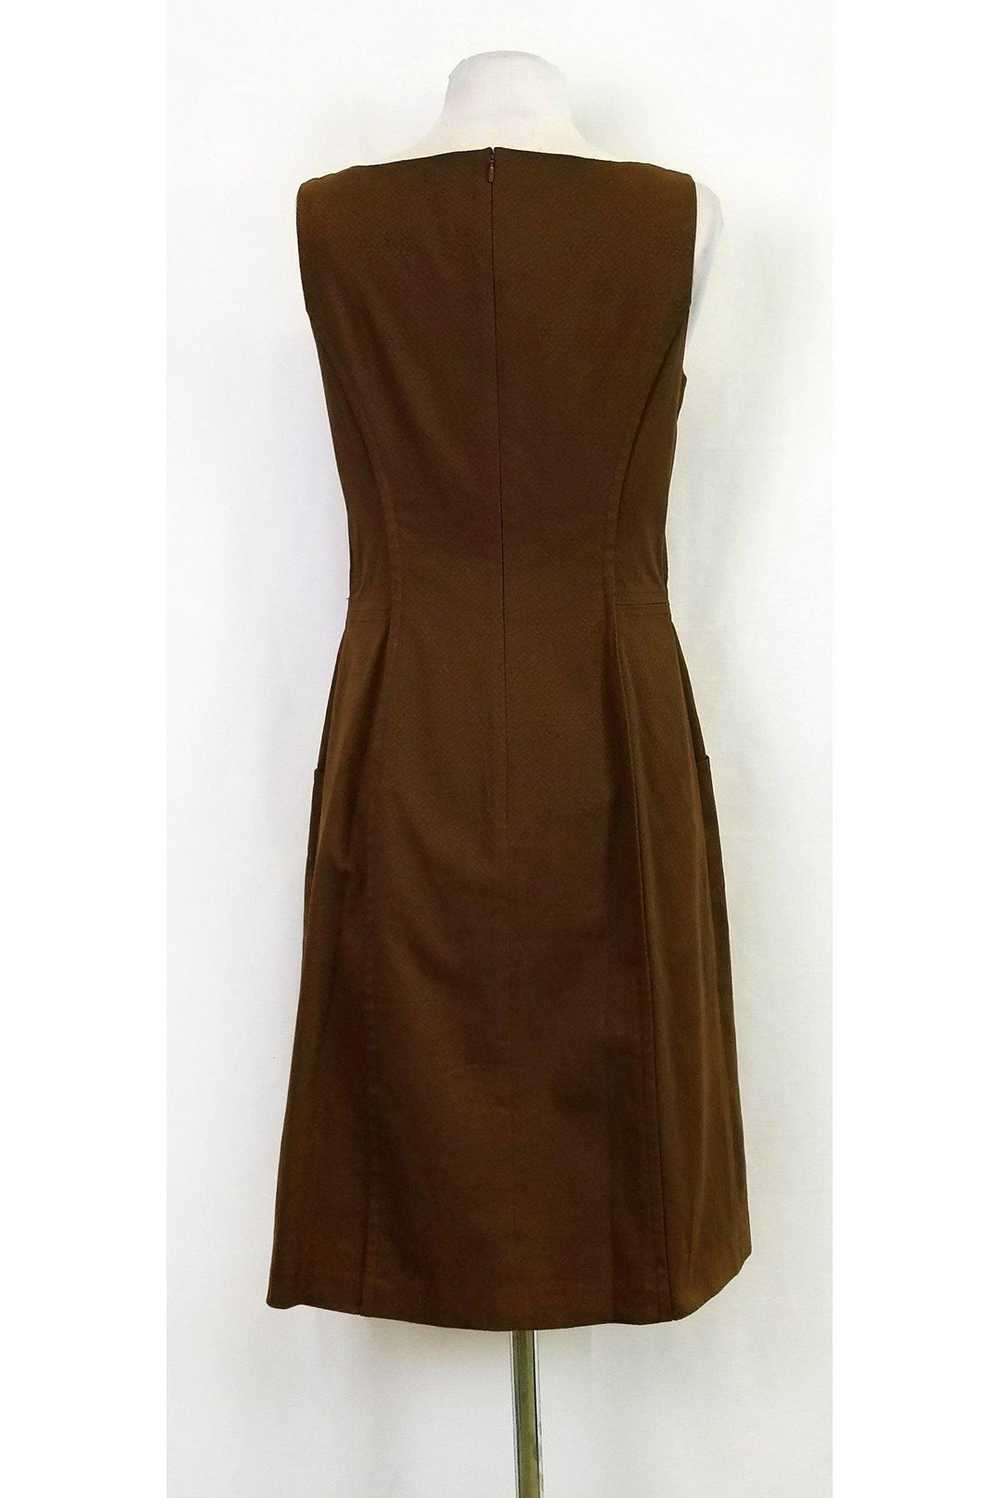 Lafayette 148 - Brown Patterned Dress Sz 2 - image 3